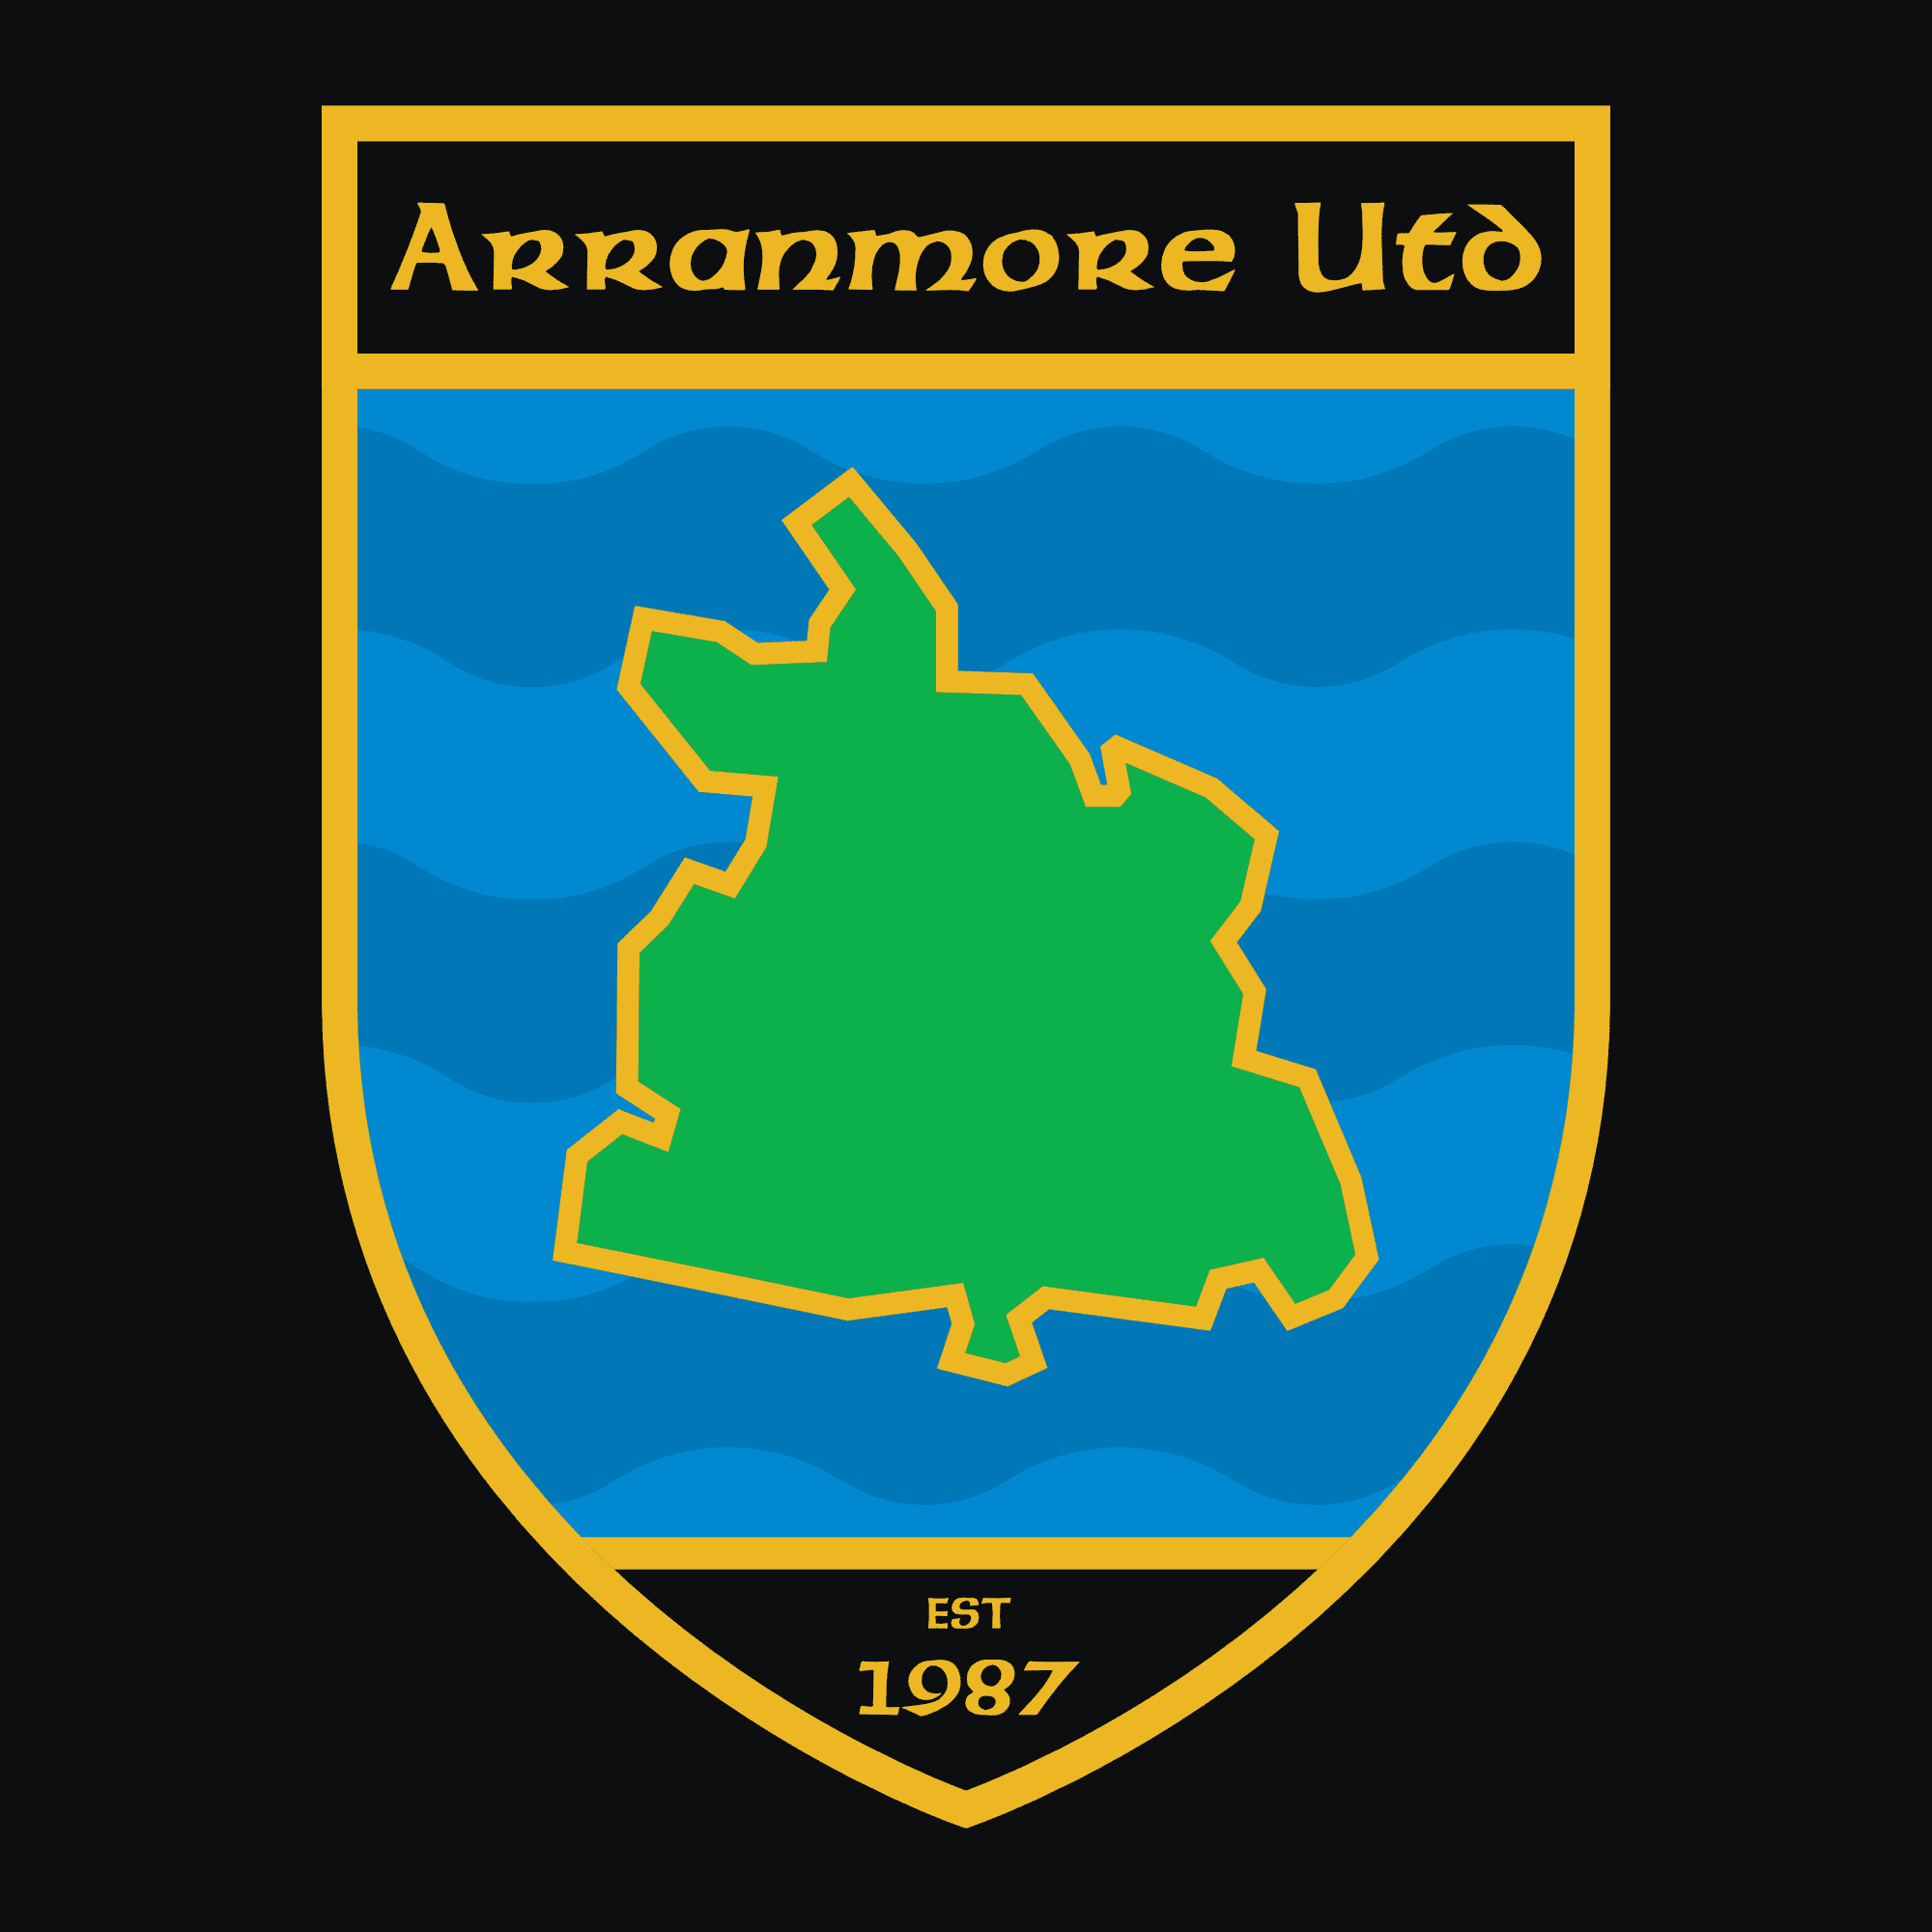 The new Arranmore Logo